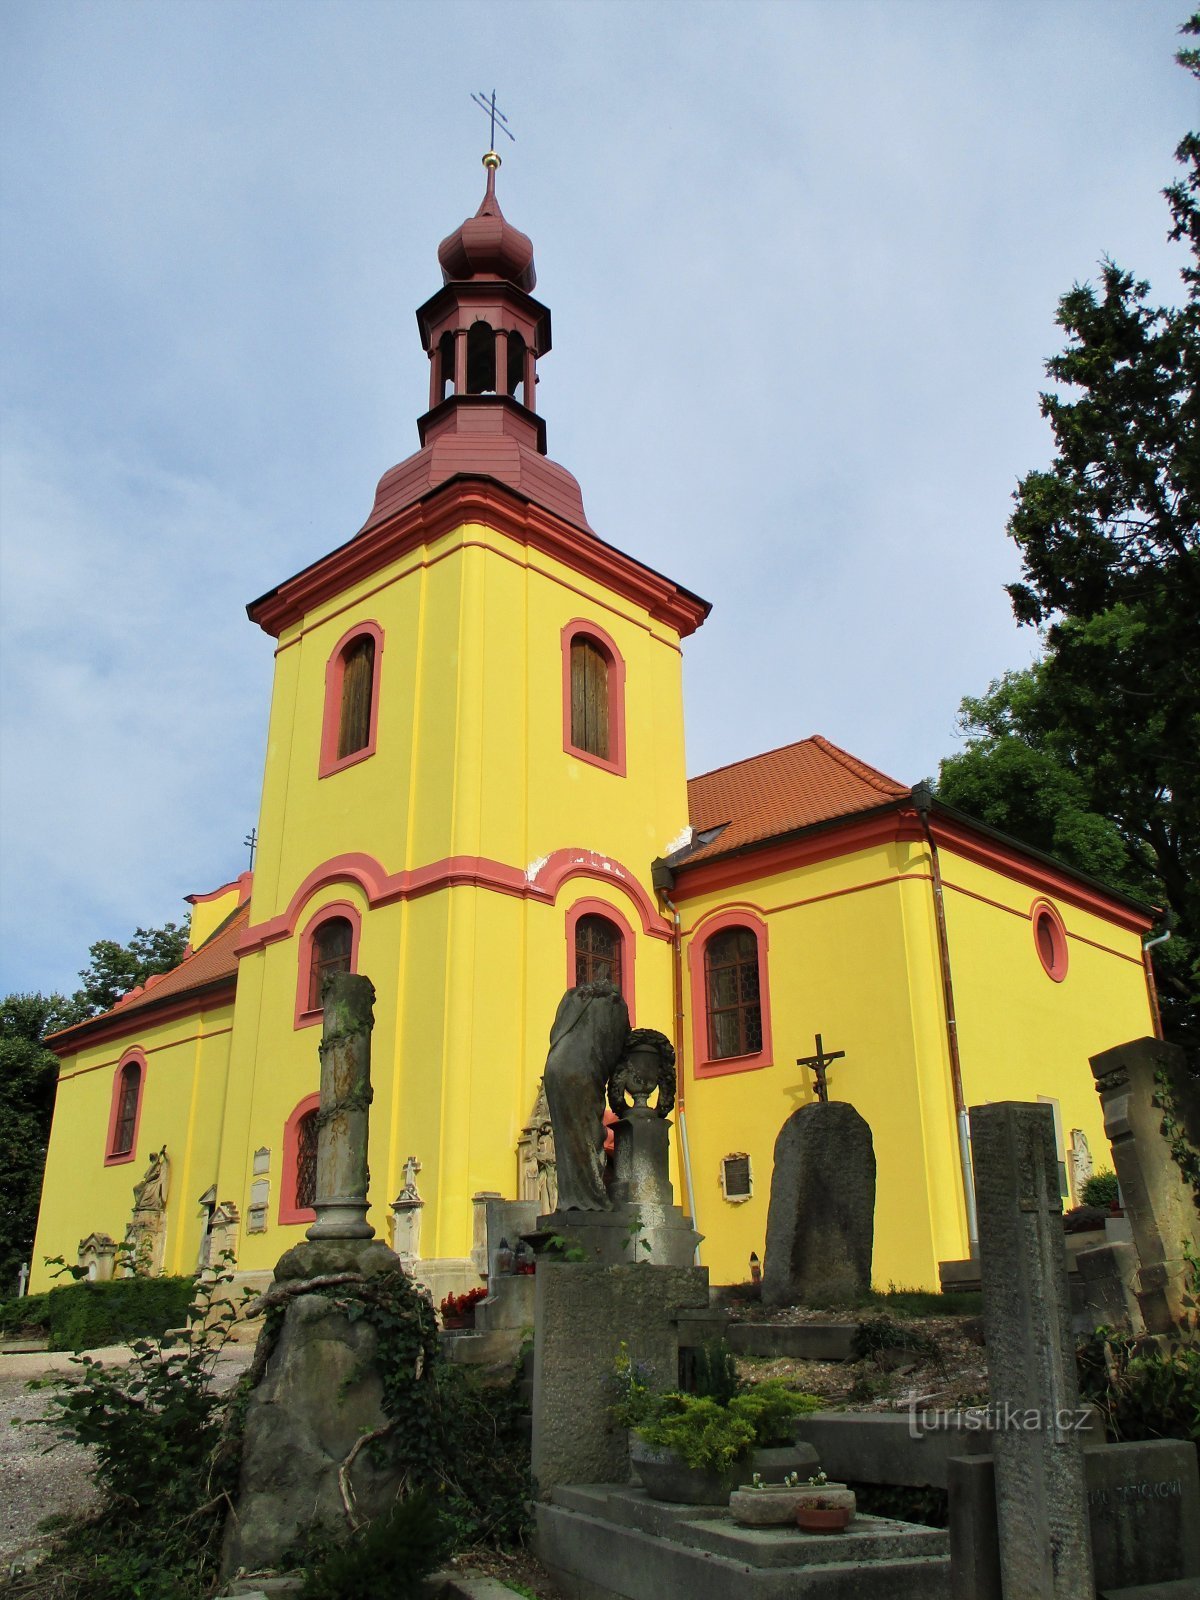 Friedhofskirche St. Gothard, Bischof (Hořice, 26.7.2020)